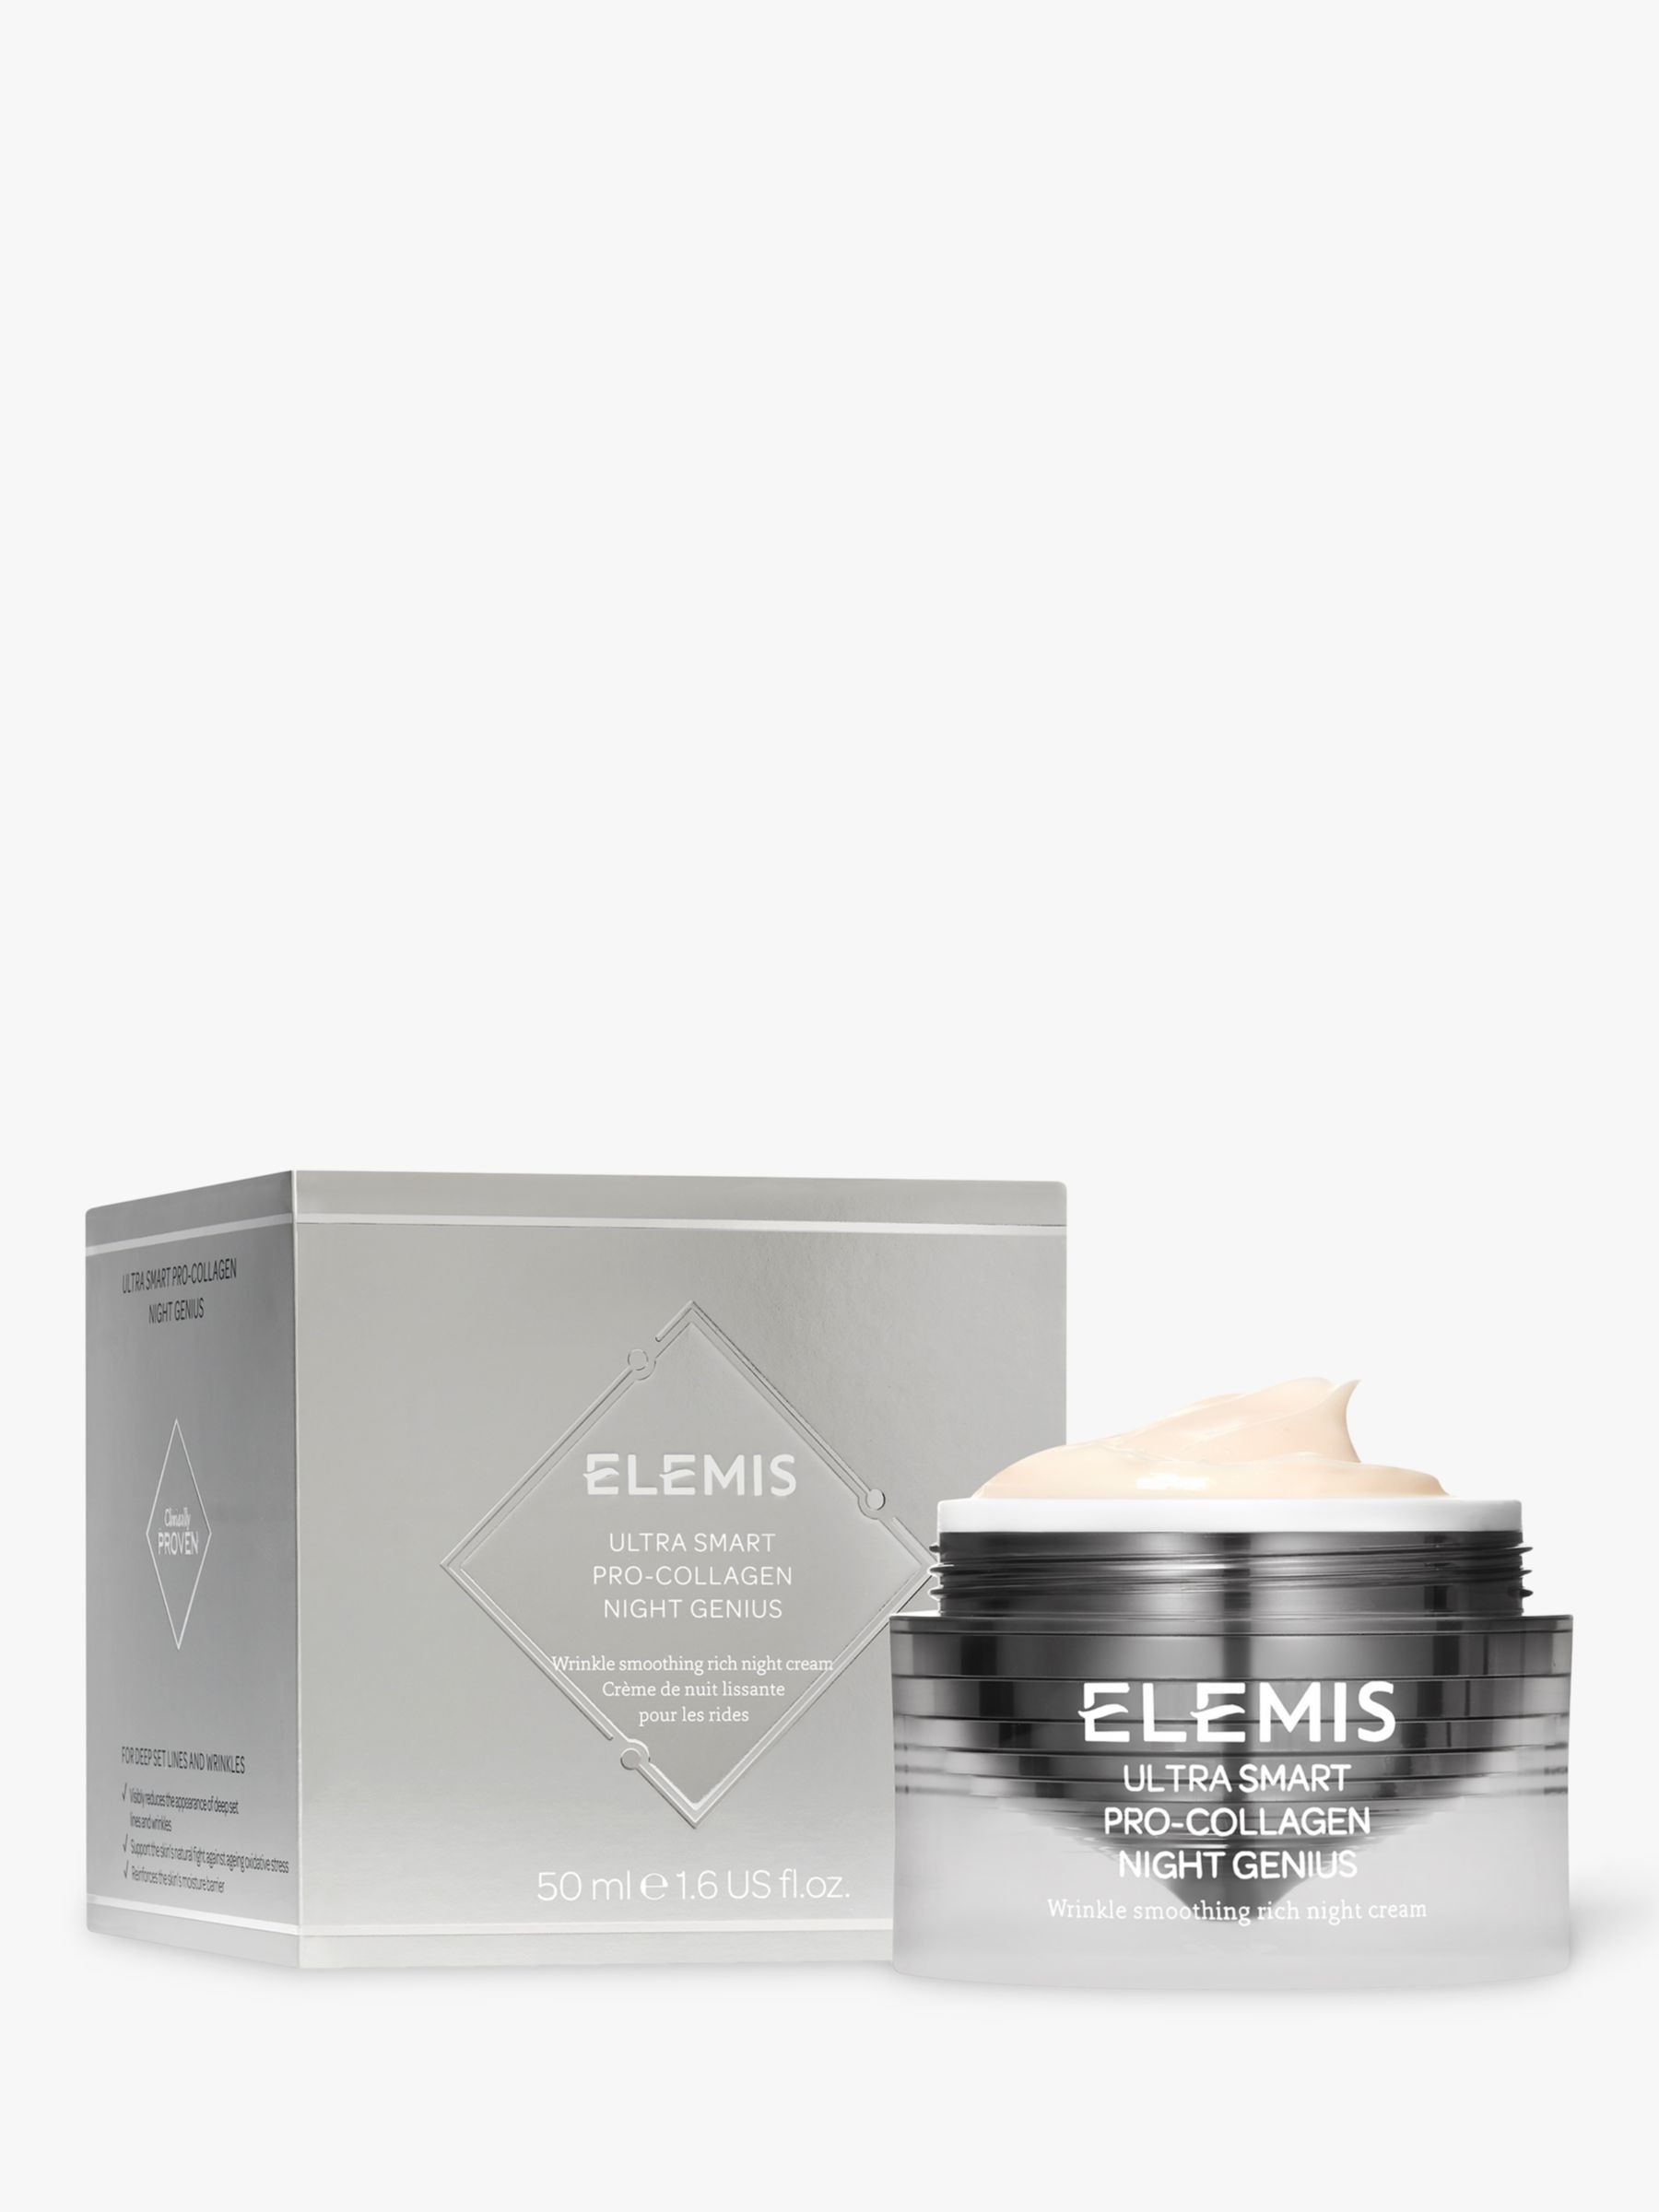 Elemis ULTRA SMART Pro-Collagen Night Genius Moisturiser, 50ml 2